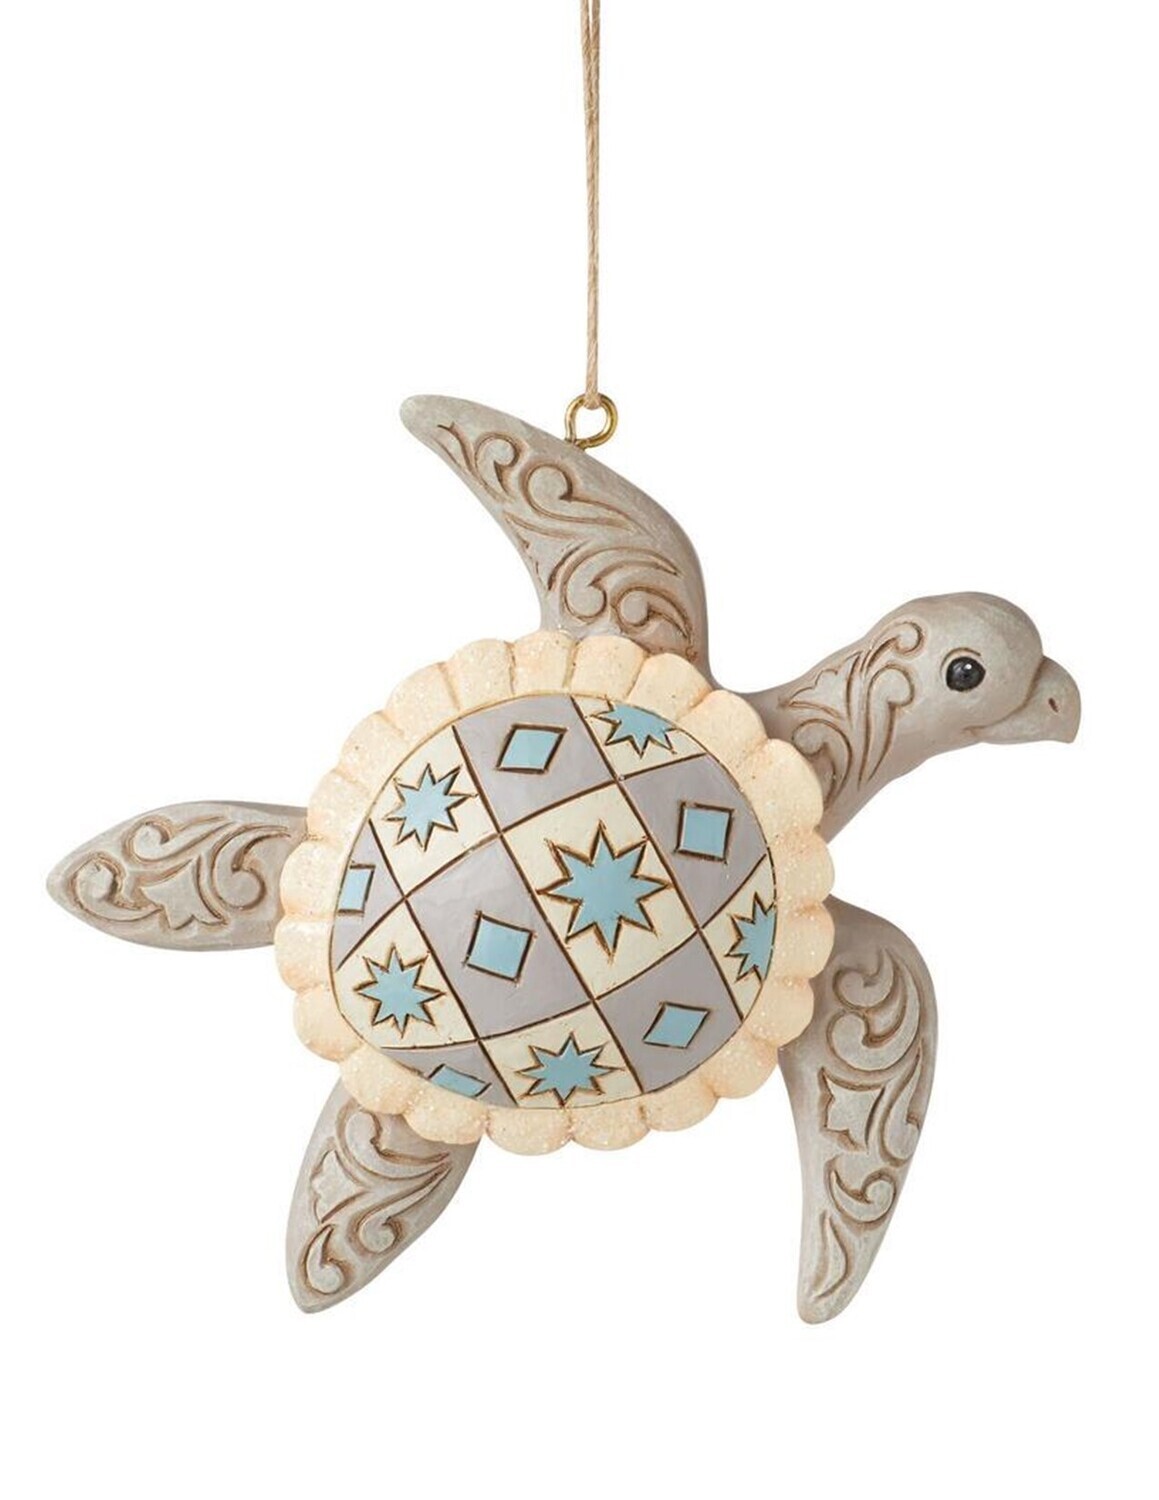 Jim Shore Heartwood Creek "Coastal Sea Turtle" Ornament (6010809)